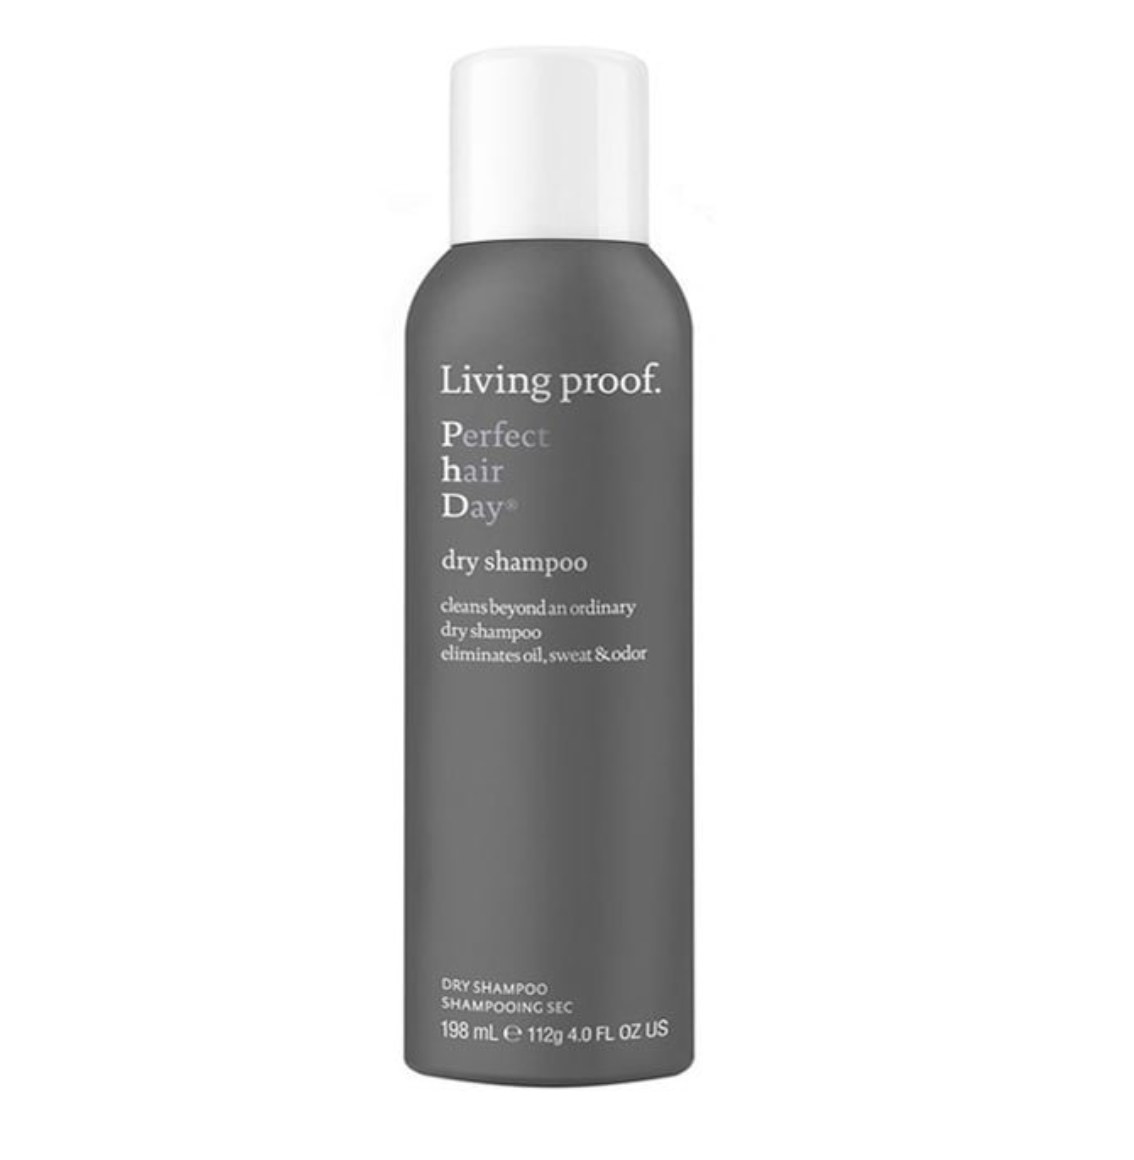 The dry shampoo in a dark gray bottle